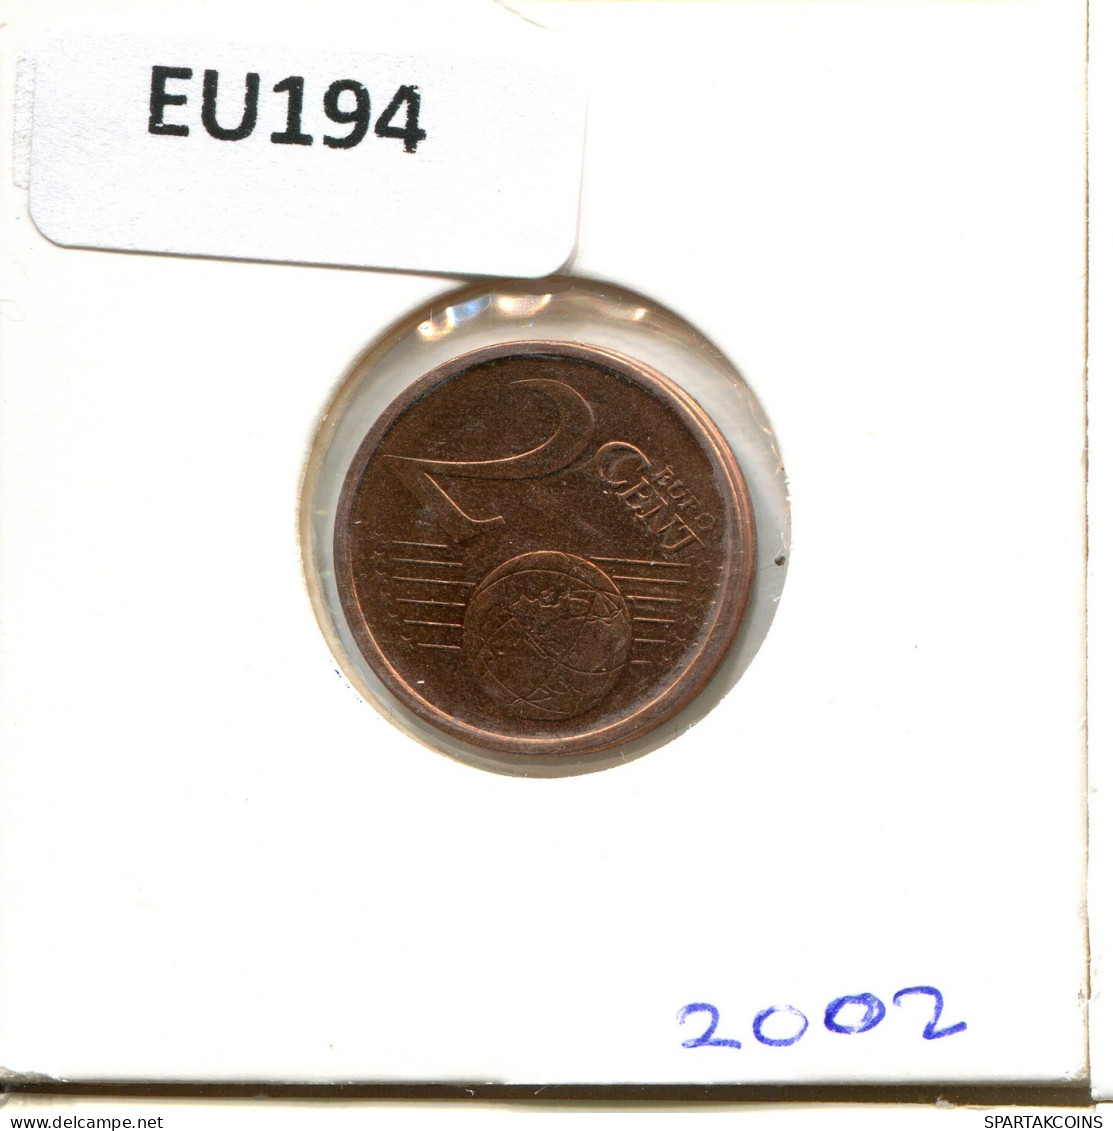 2 EURO CENTS 2002 IRLAND IRELAND Münze #EU194.D - Ireland